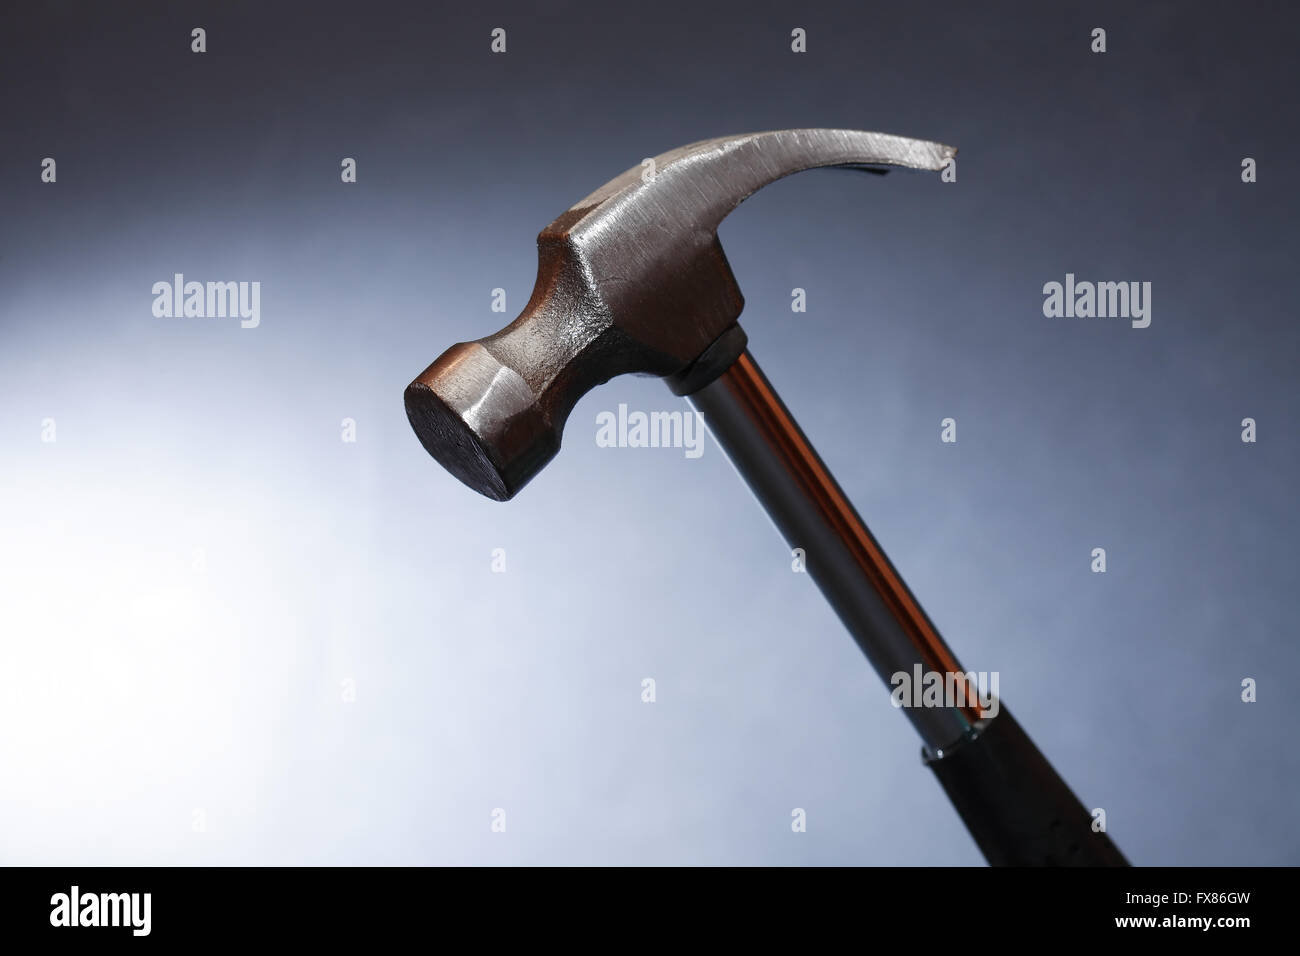 Work tool. Metal hammer closeup on nice dark background Stock Photo